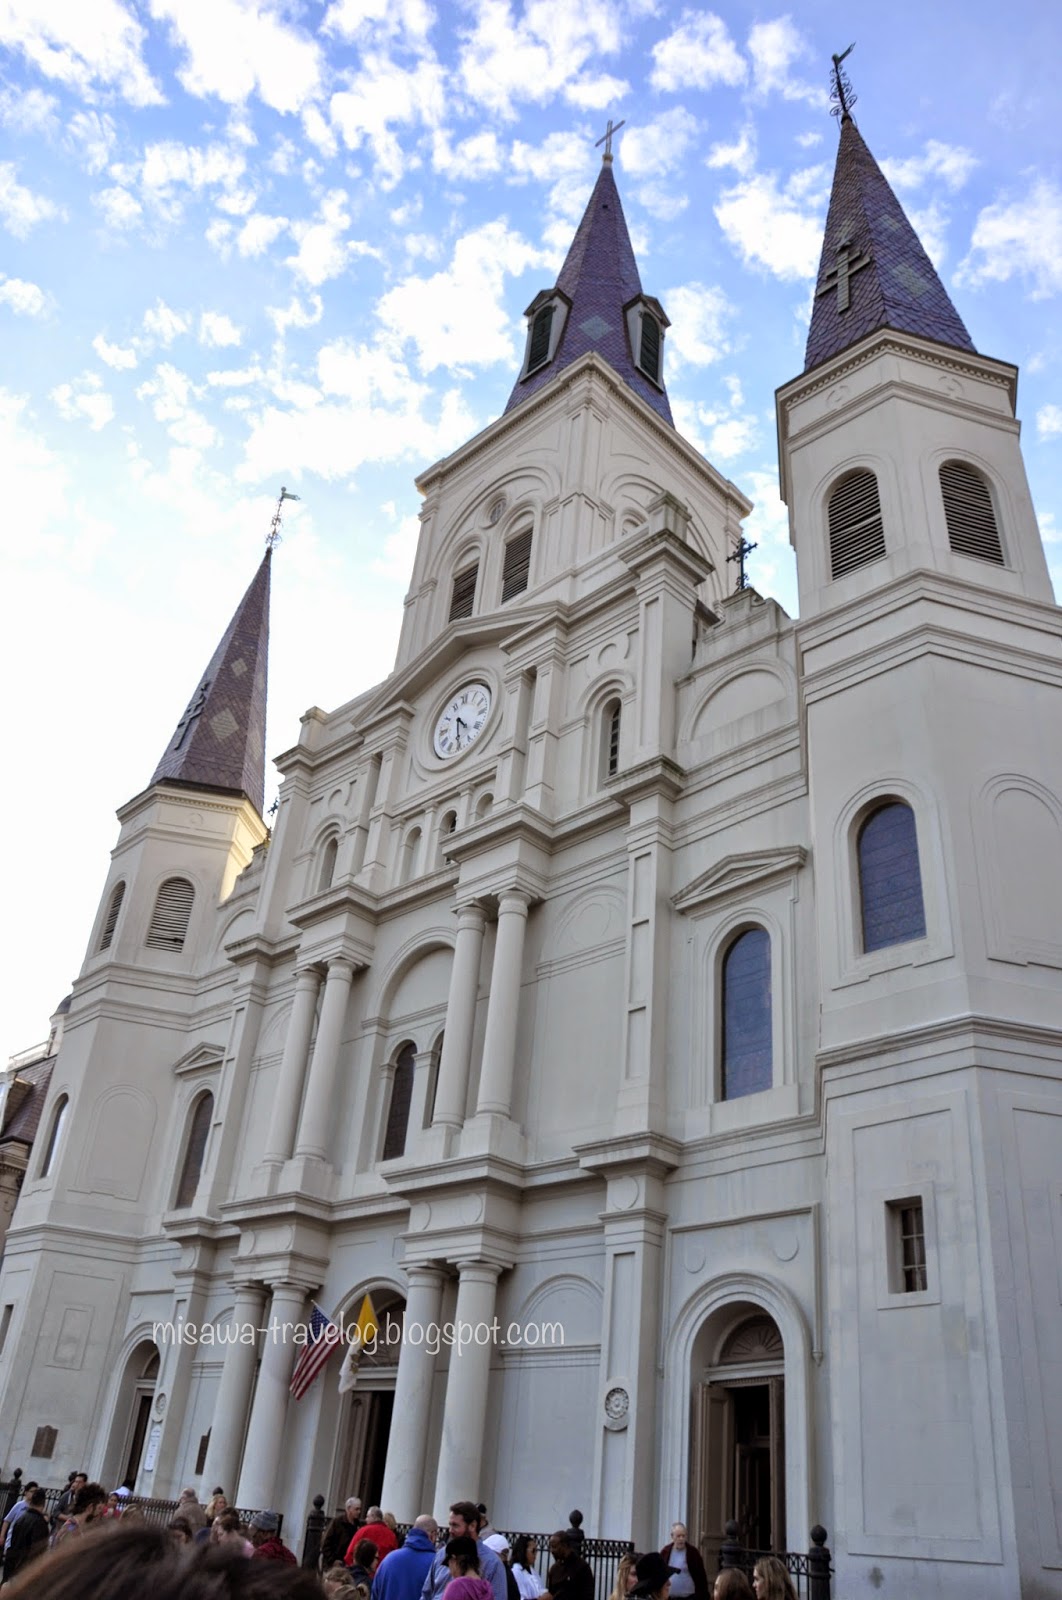 TRAVELOG: French Quarter, New Orleans, Louisiana